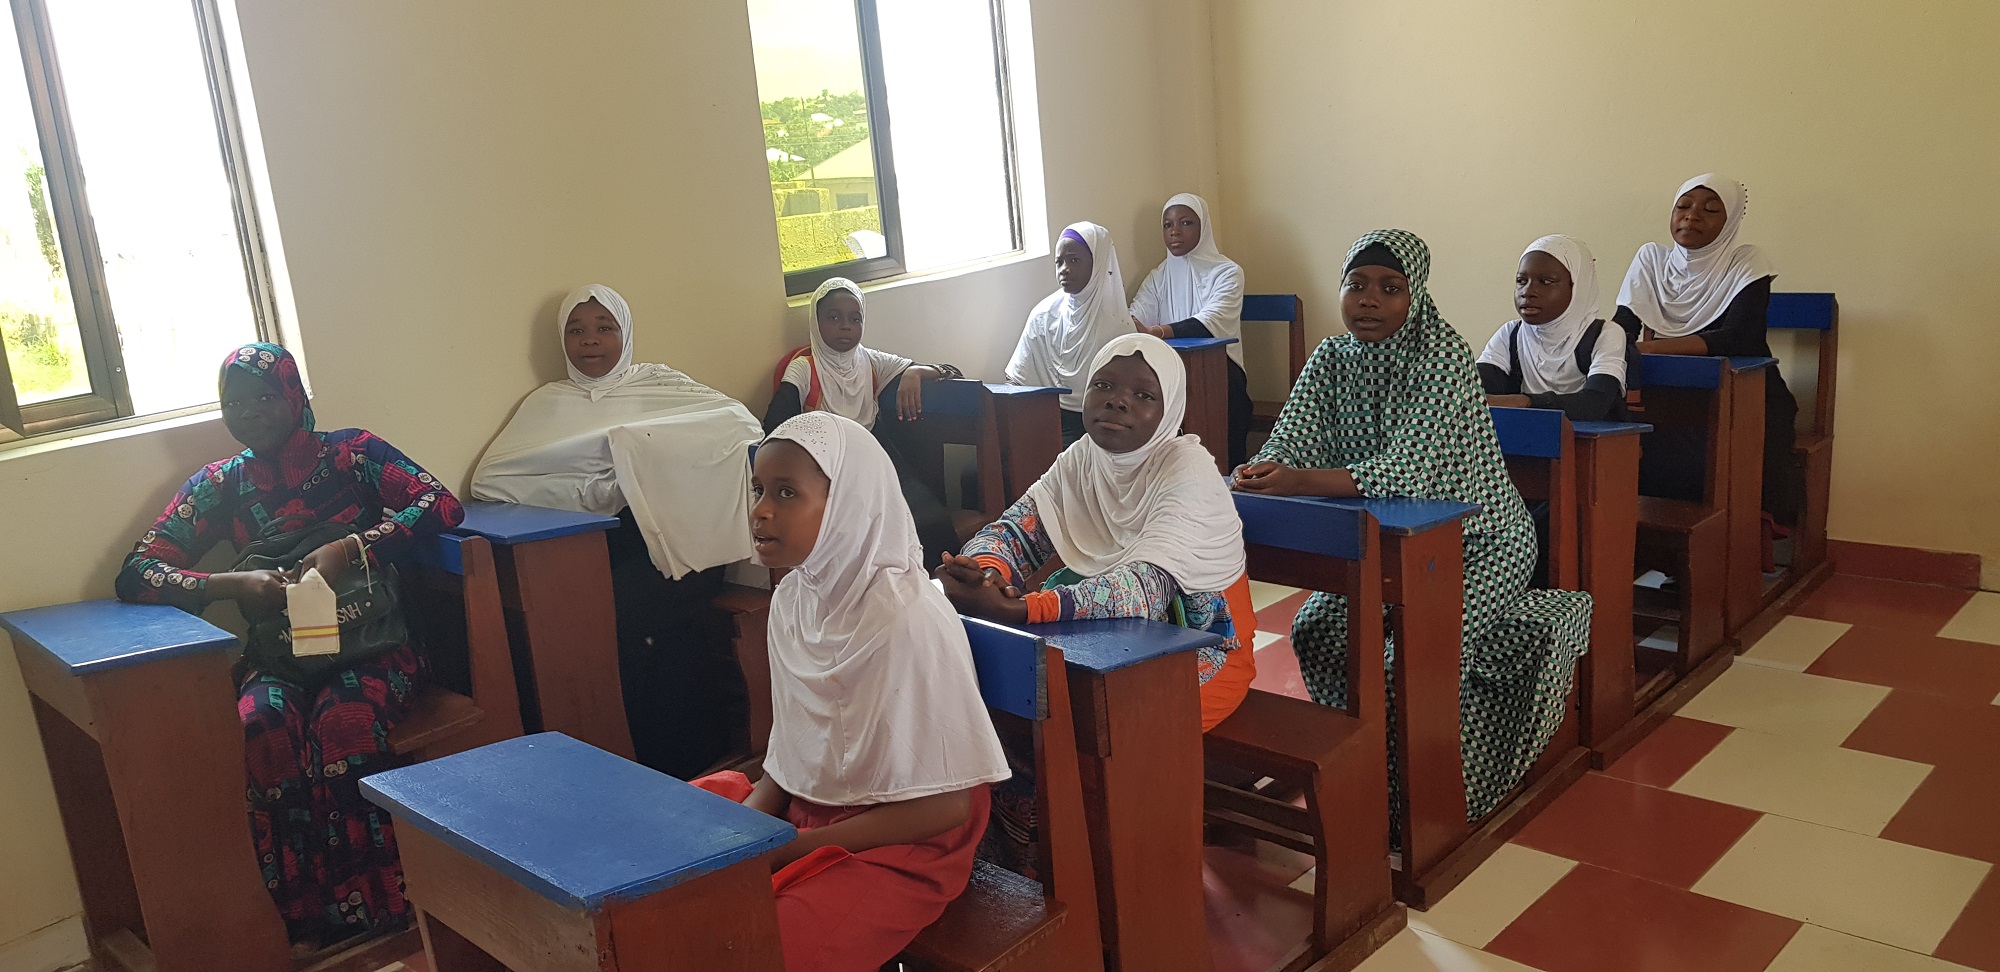 Qatar Charity inaugurates 4 new schools in Ghana